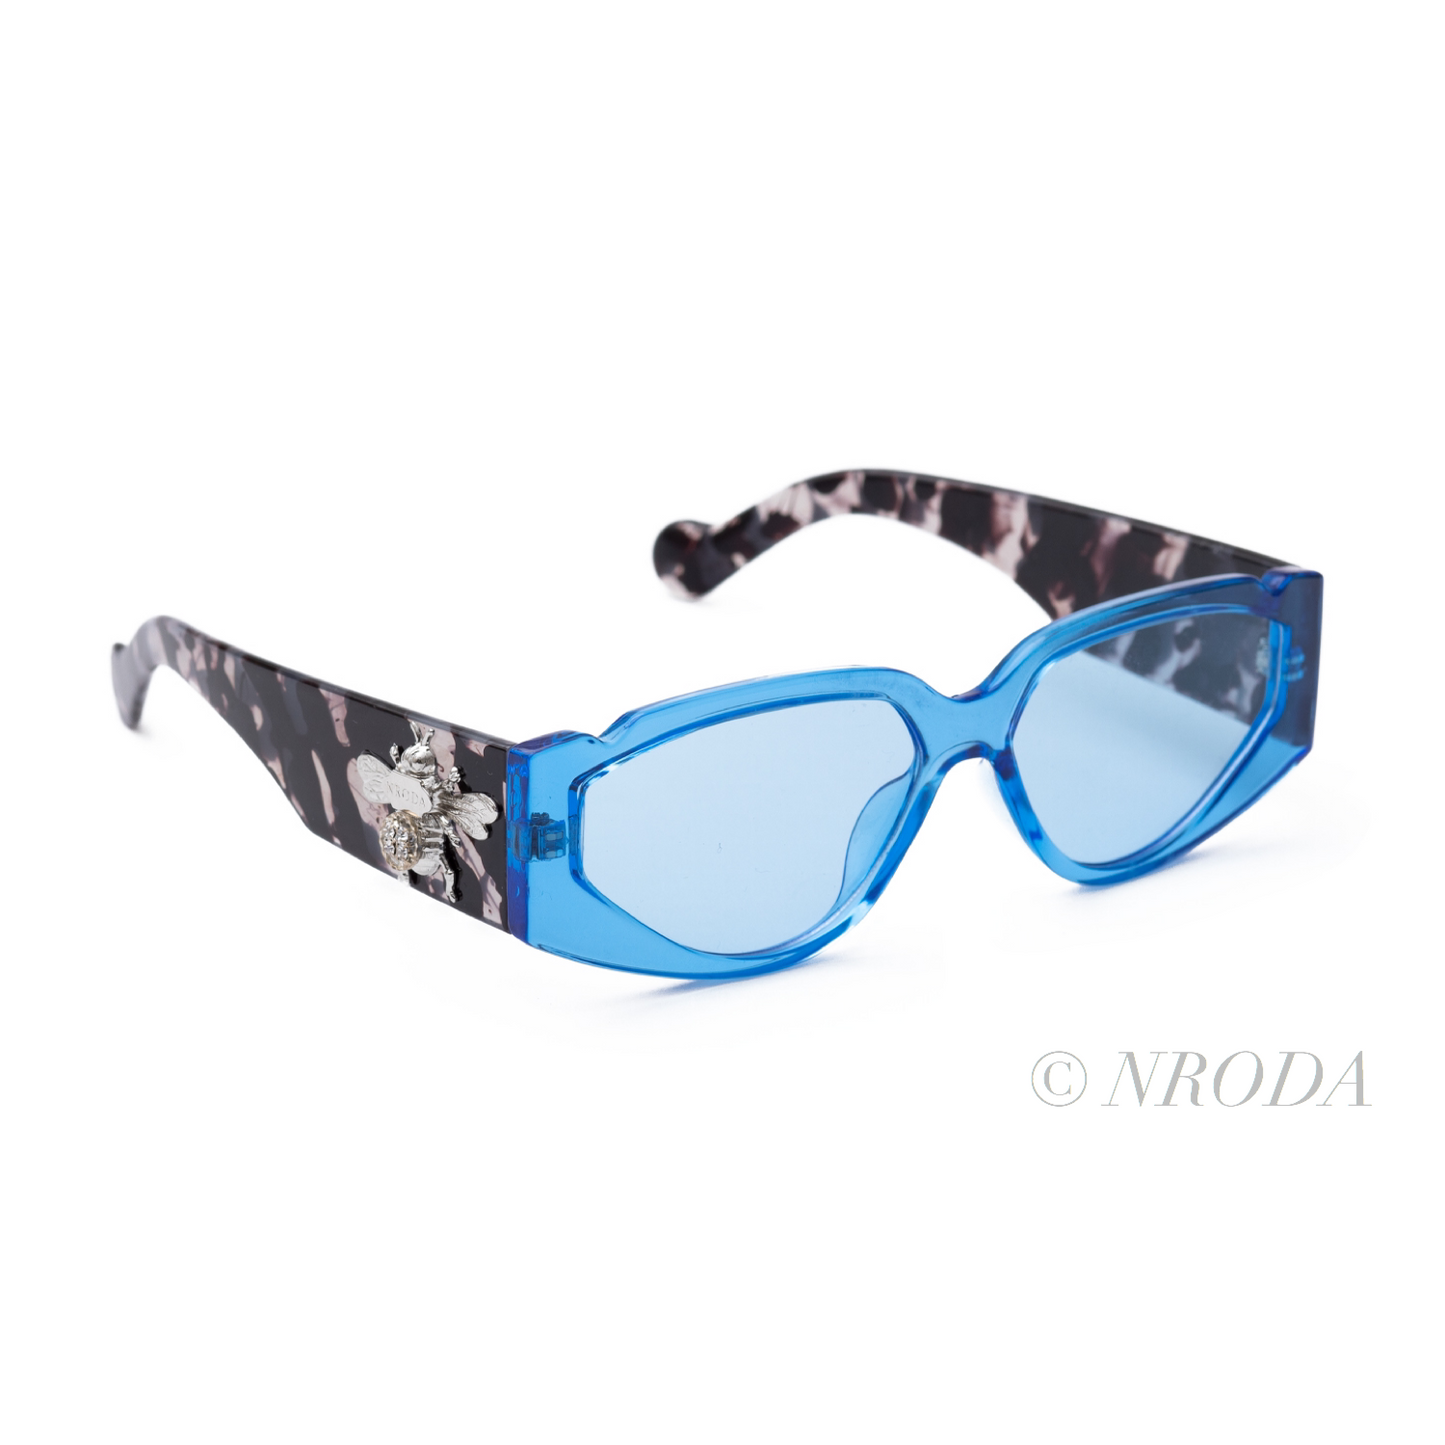 Nroda Gianni Love Bee - Gemstone edition Sapphire Blue Eyewear Sunglasses Collection, Tnemnroda man- NRODA